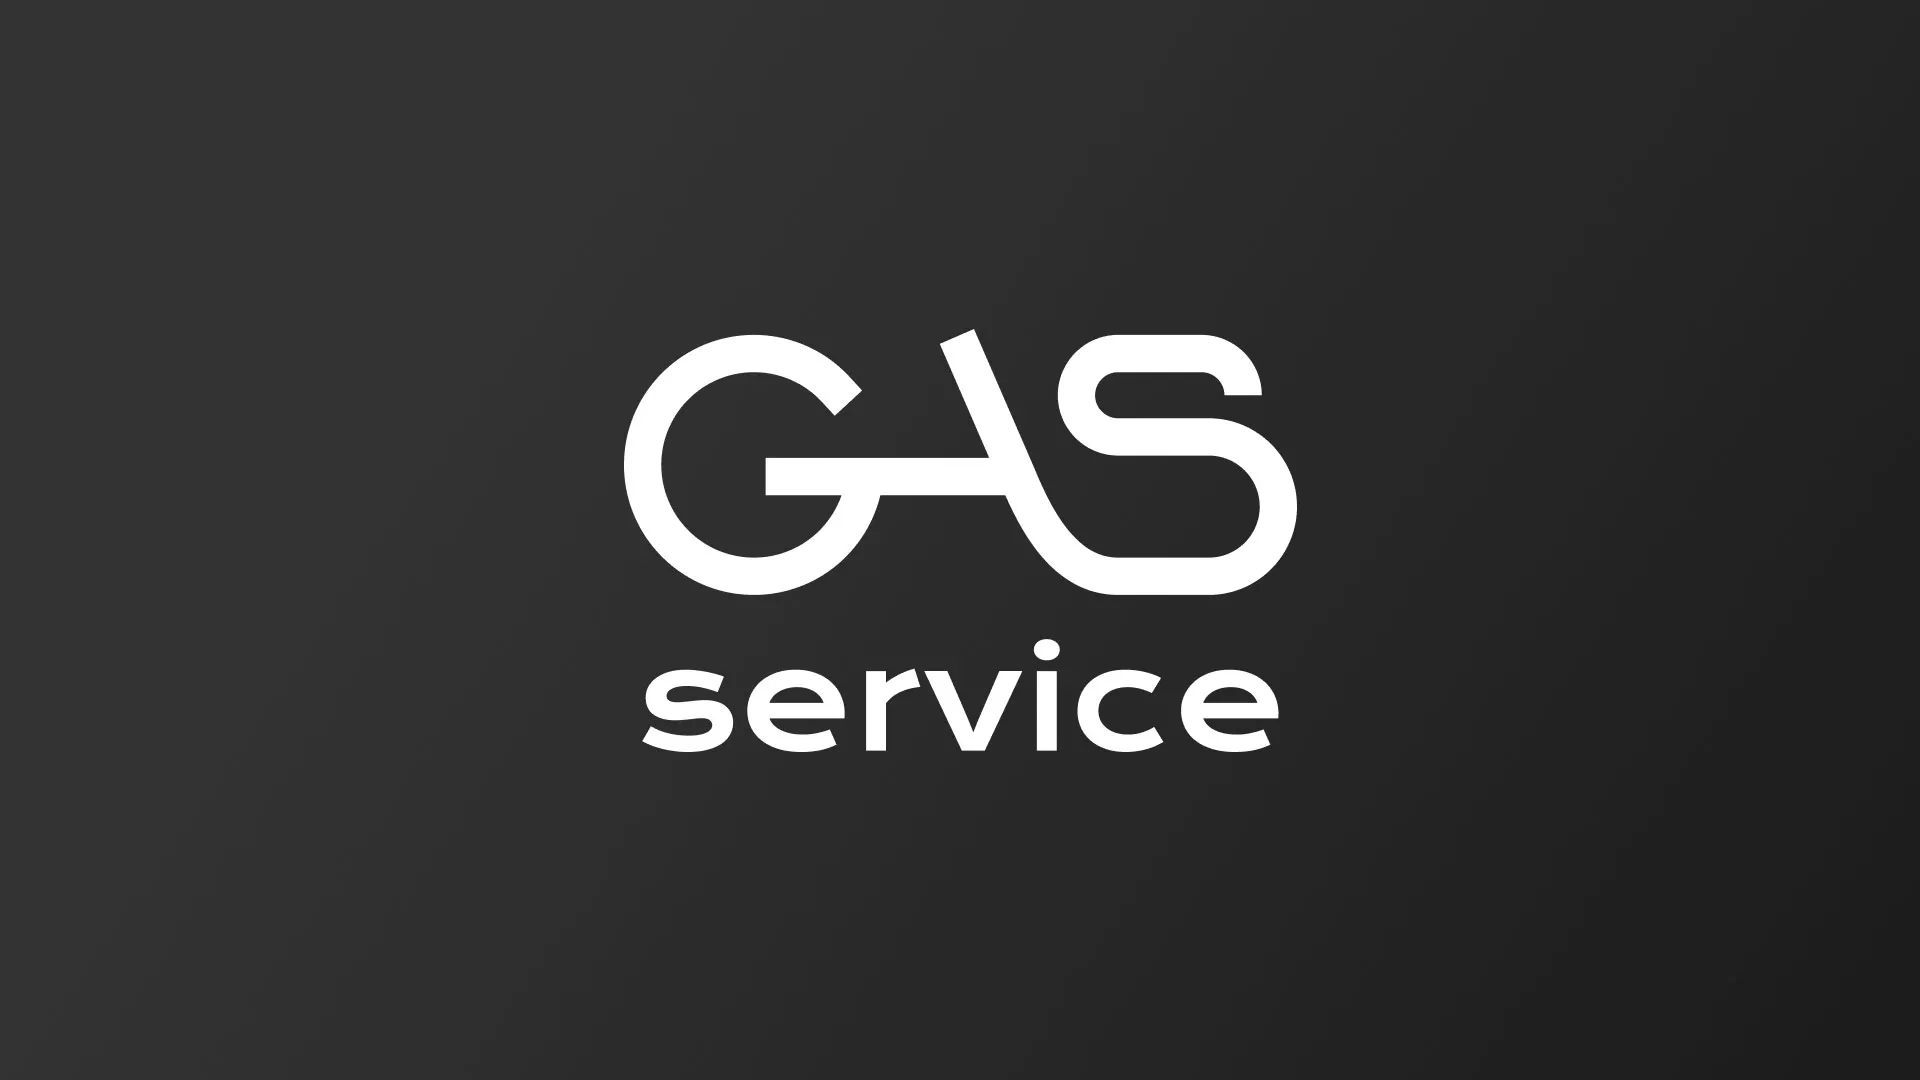 Разработка логотипа компании «Сервис газ» в Звенигово